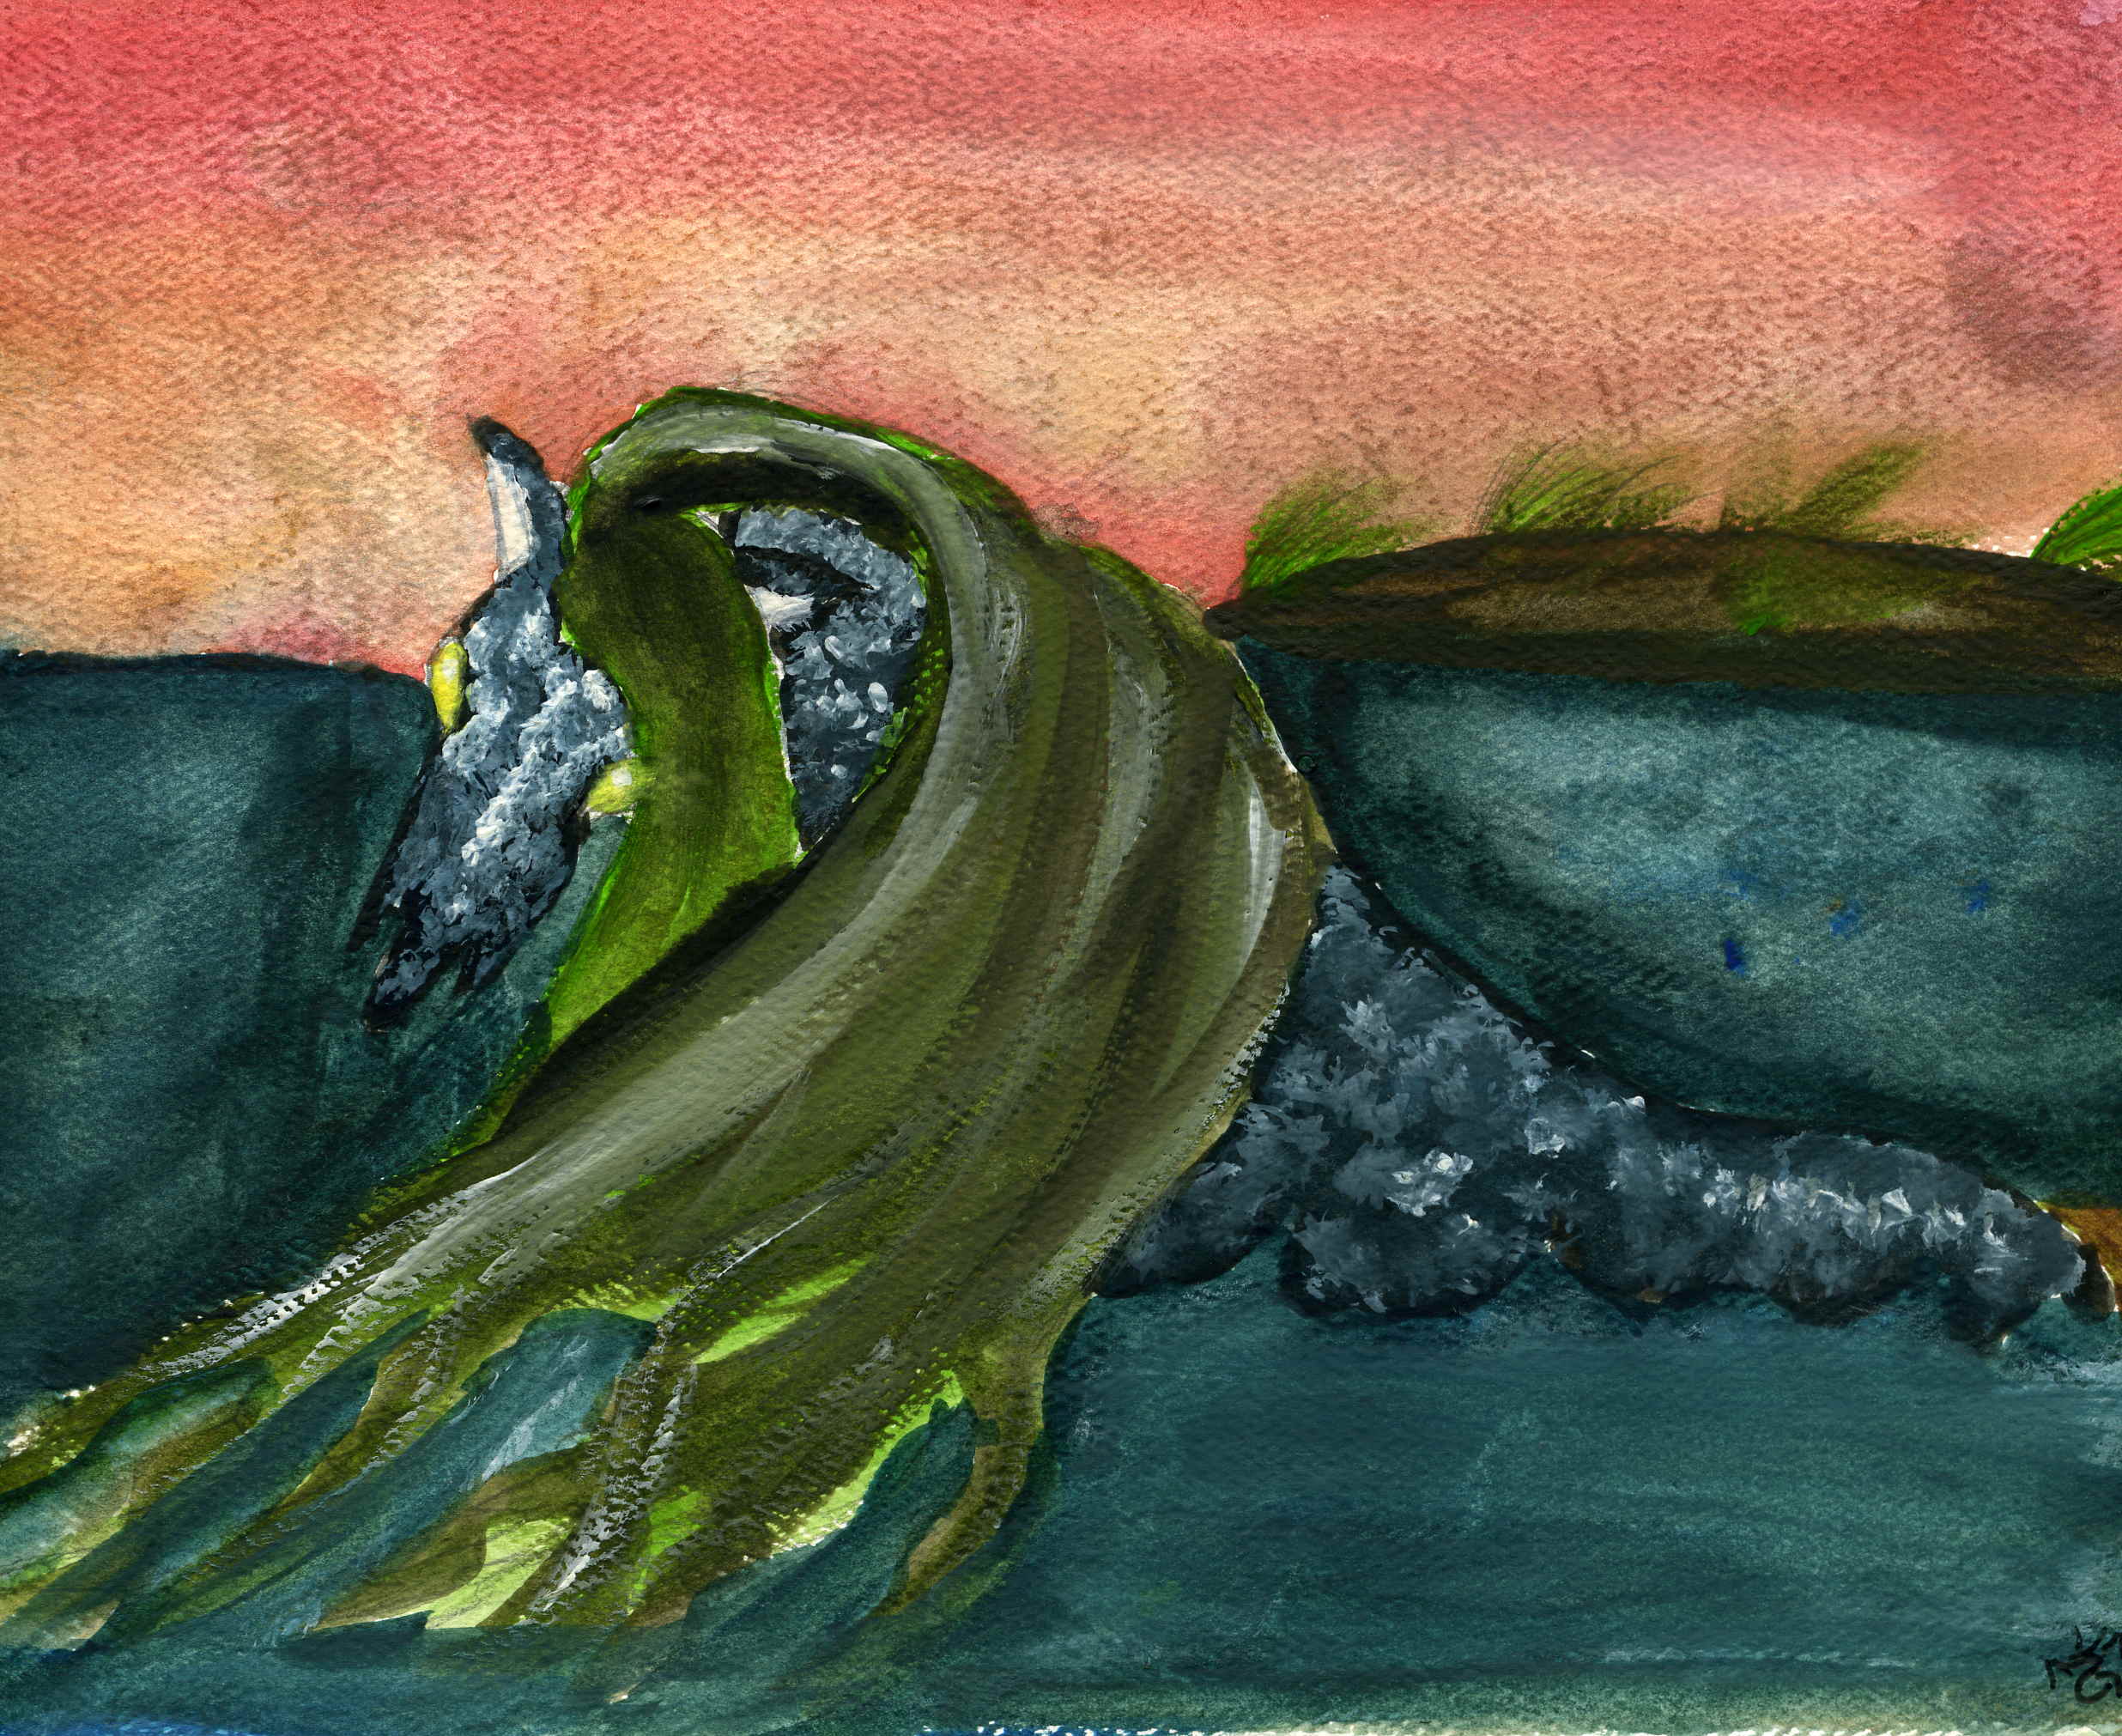 The Kelpie's Swamp by UndeadDragoness